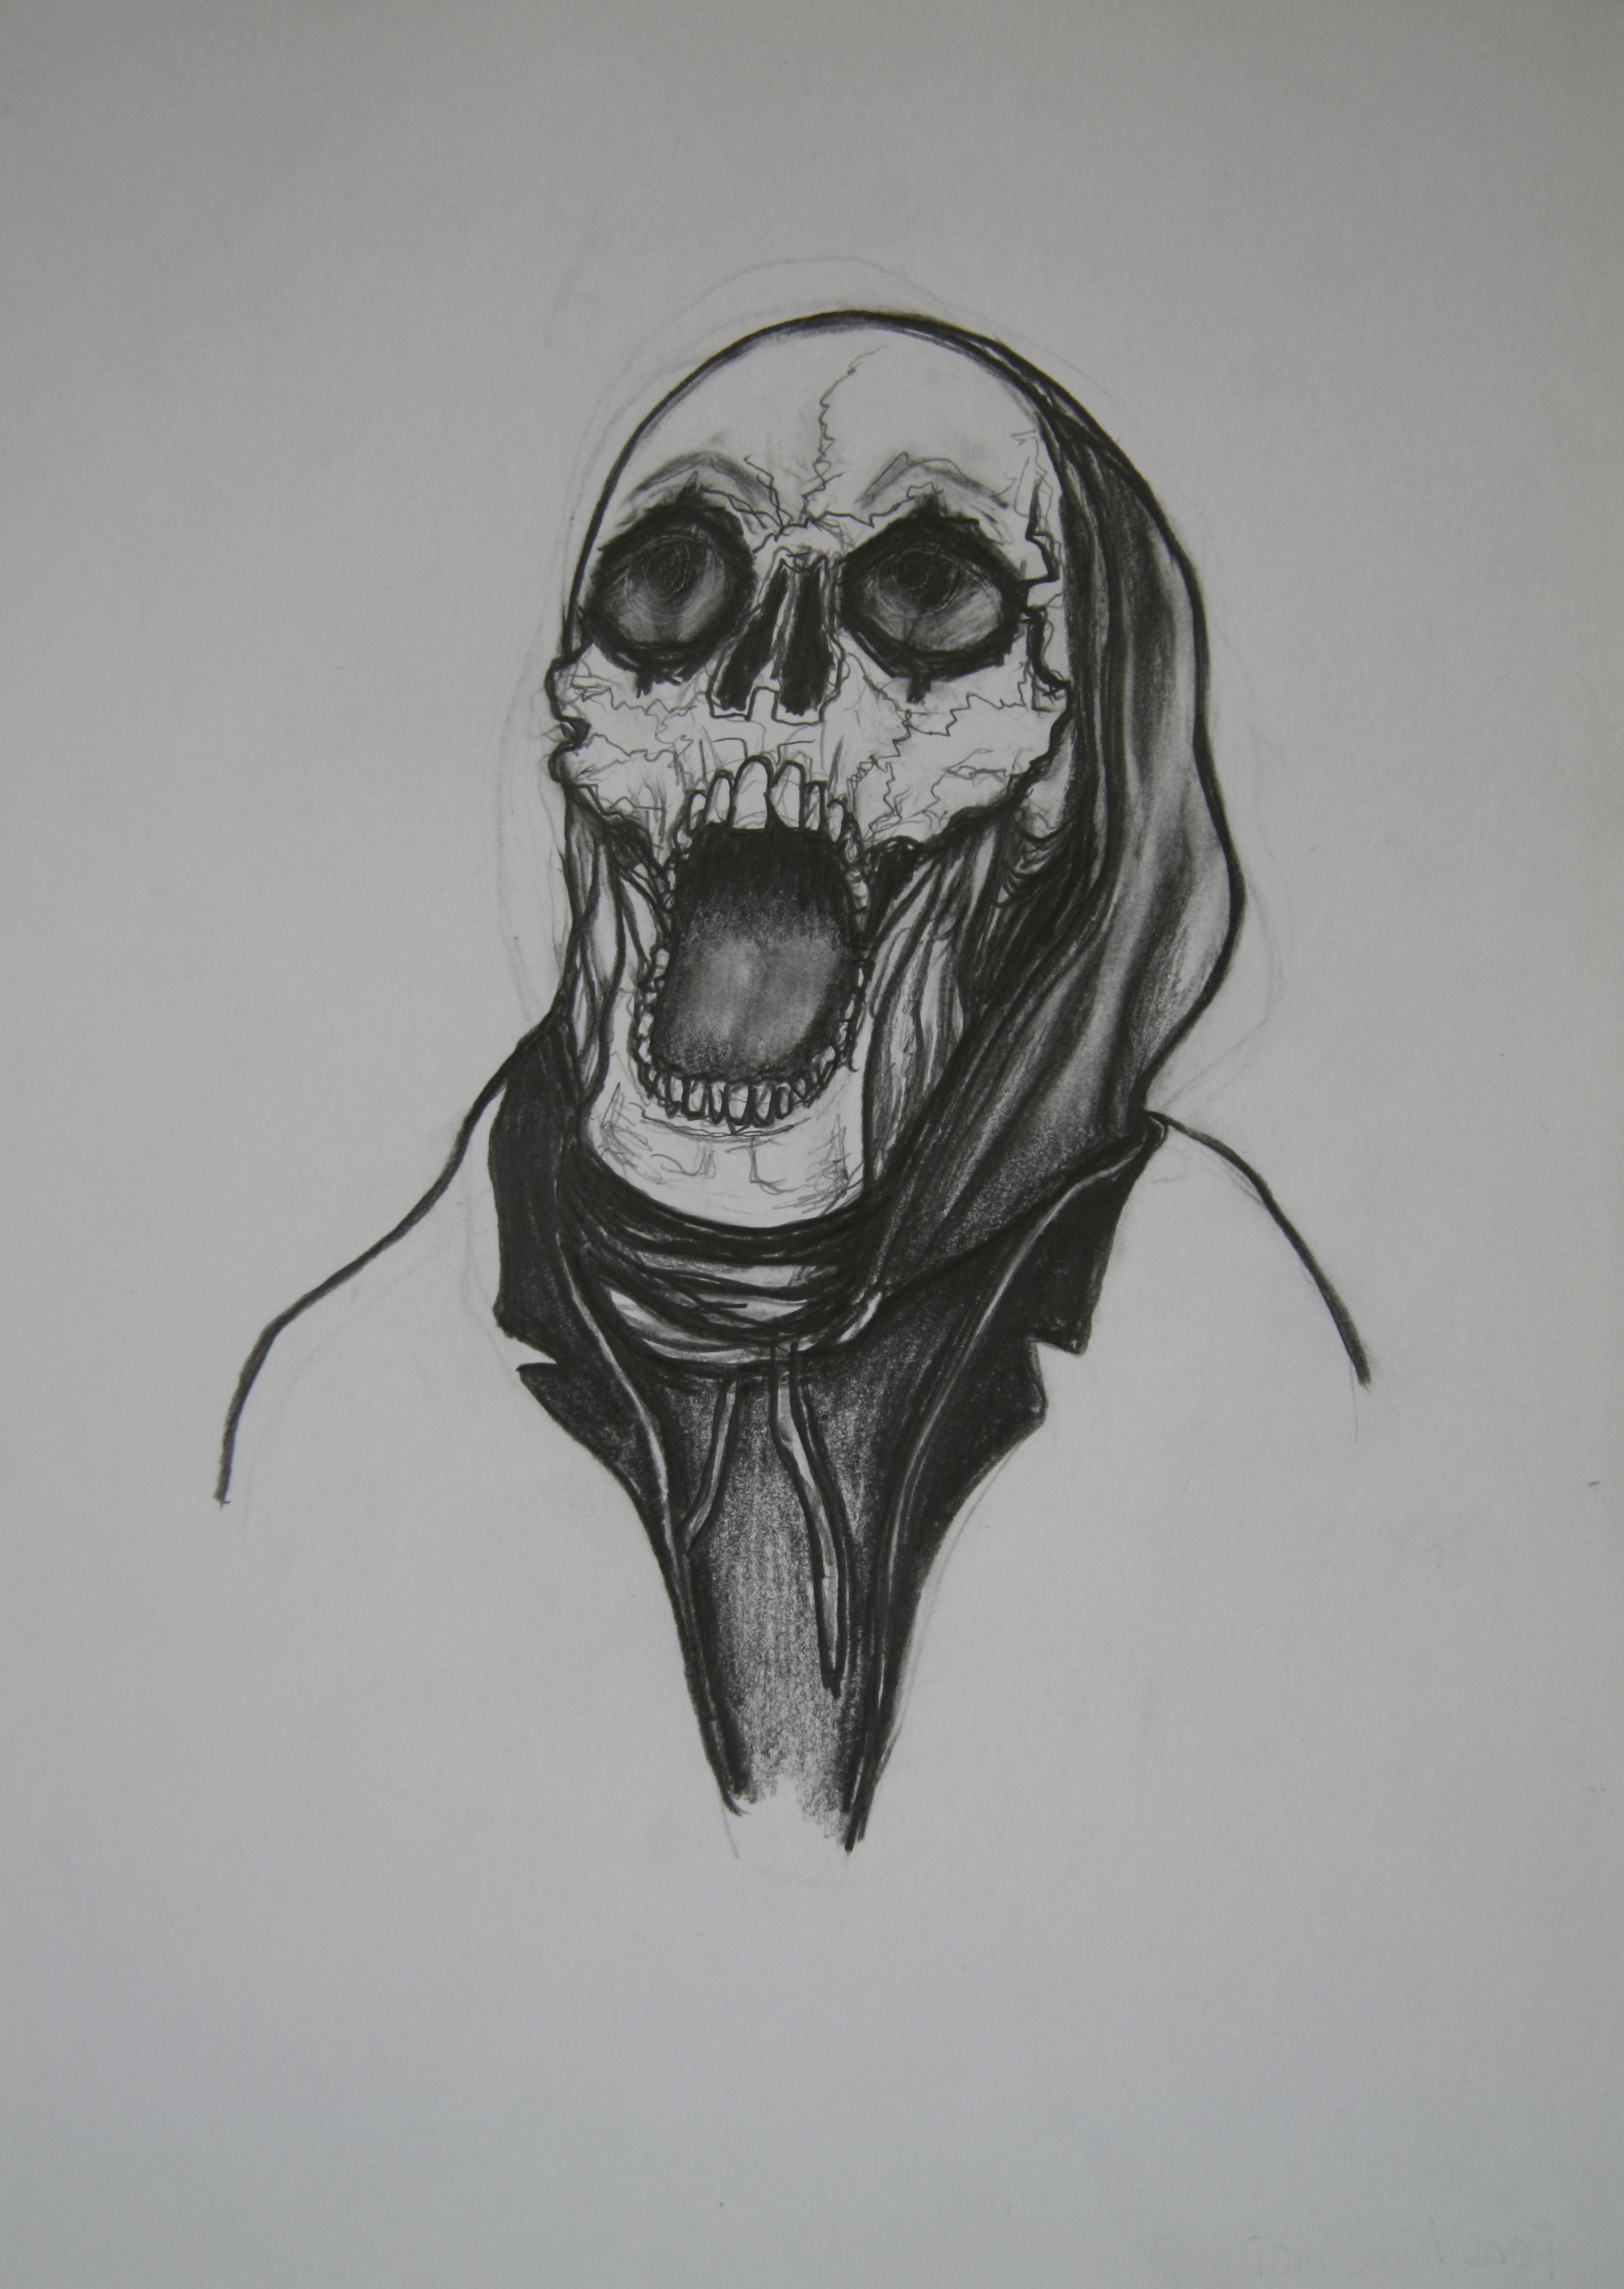 Skull 4, 30x21cm, pencil on paper